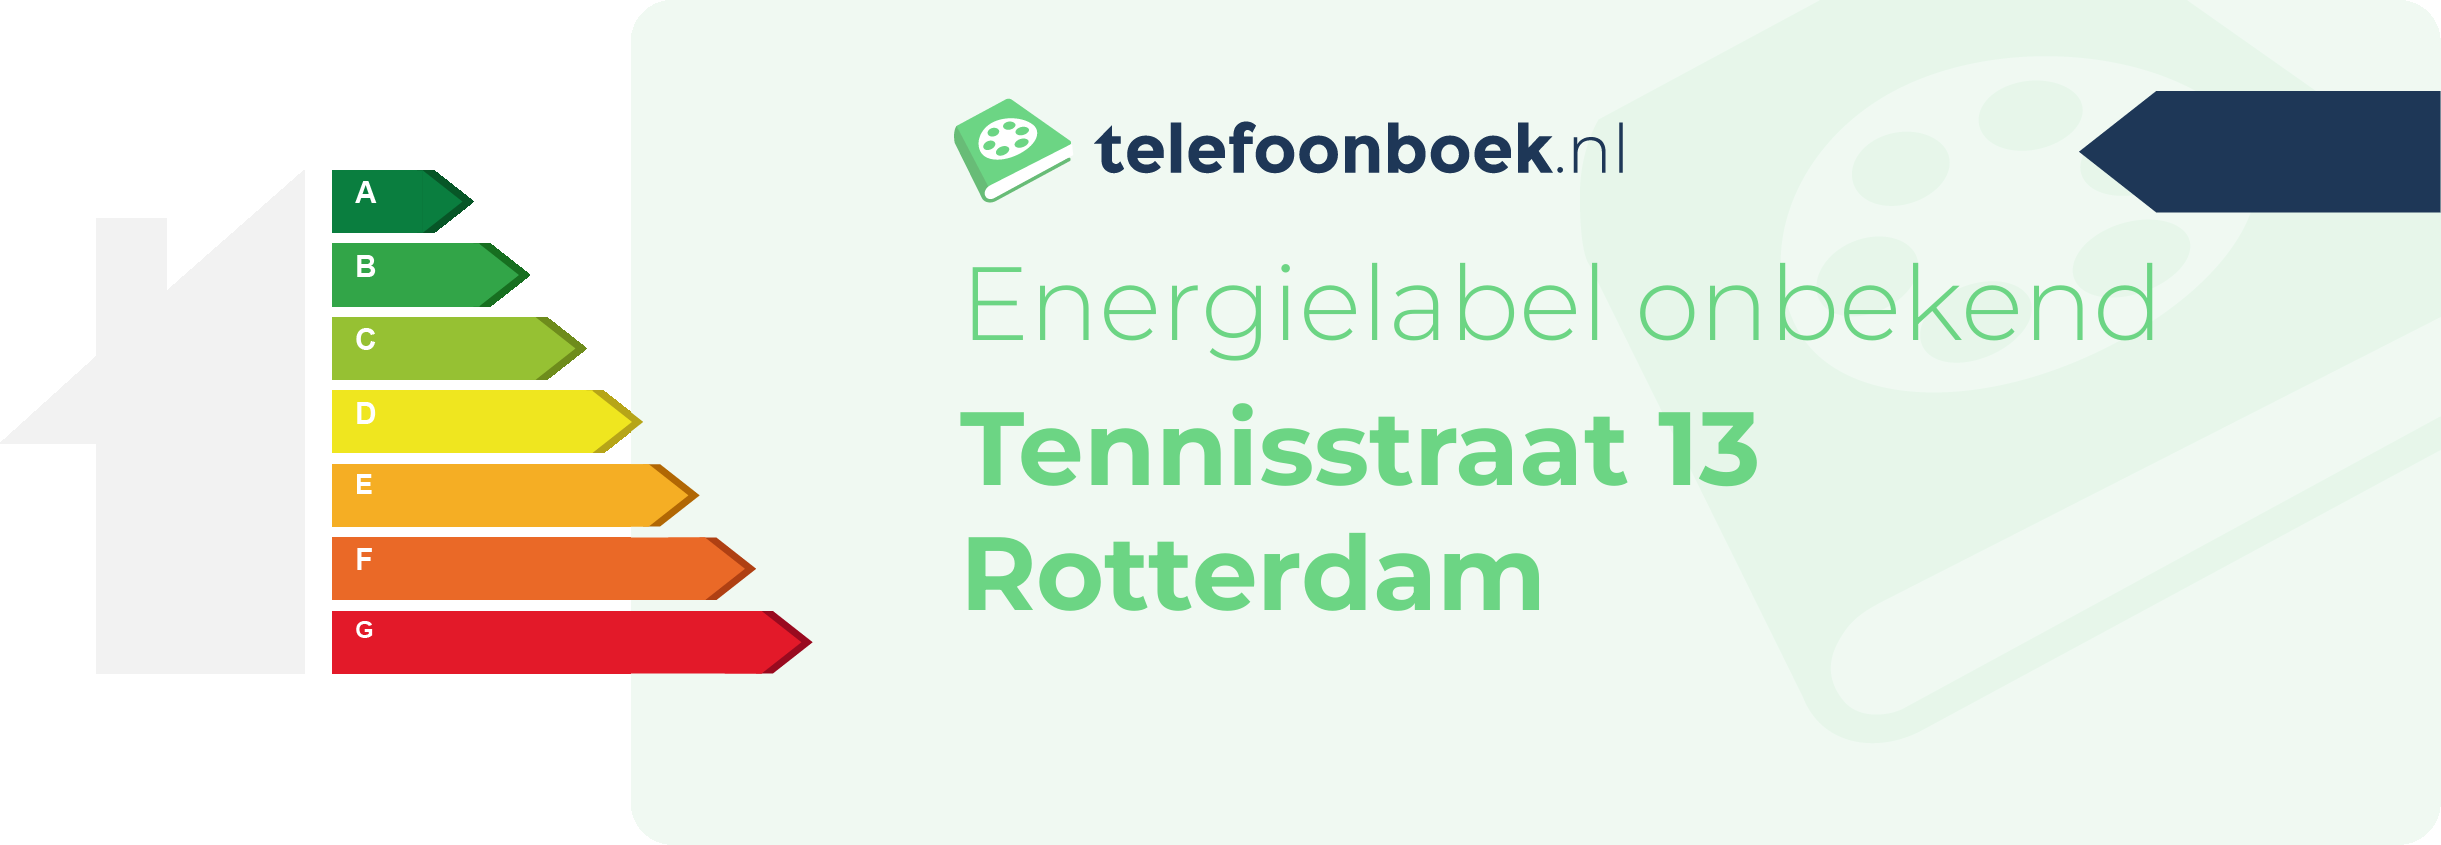 Energielabel Tennisstraat 13 Rotterdam